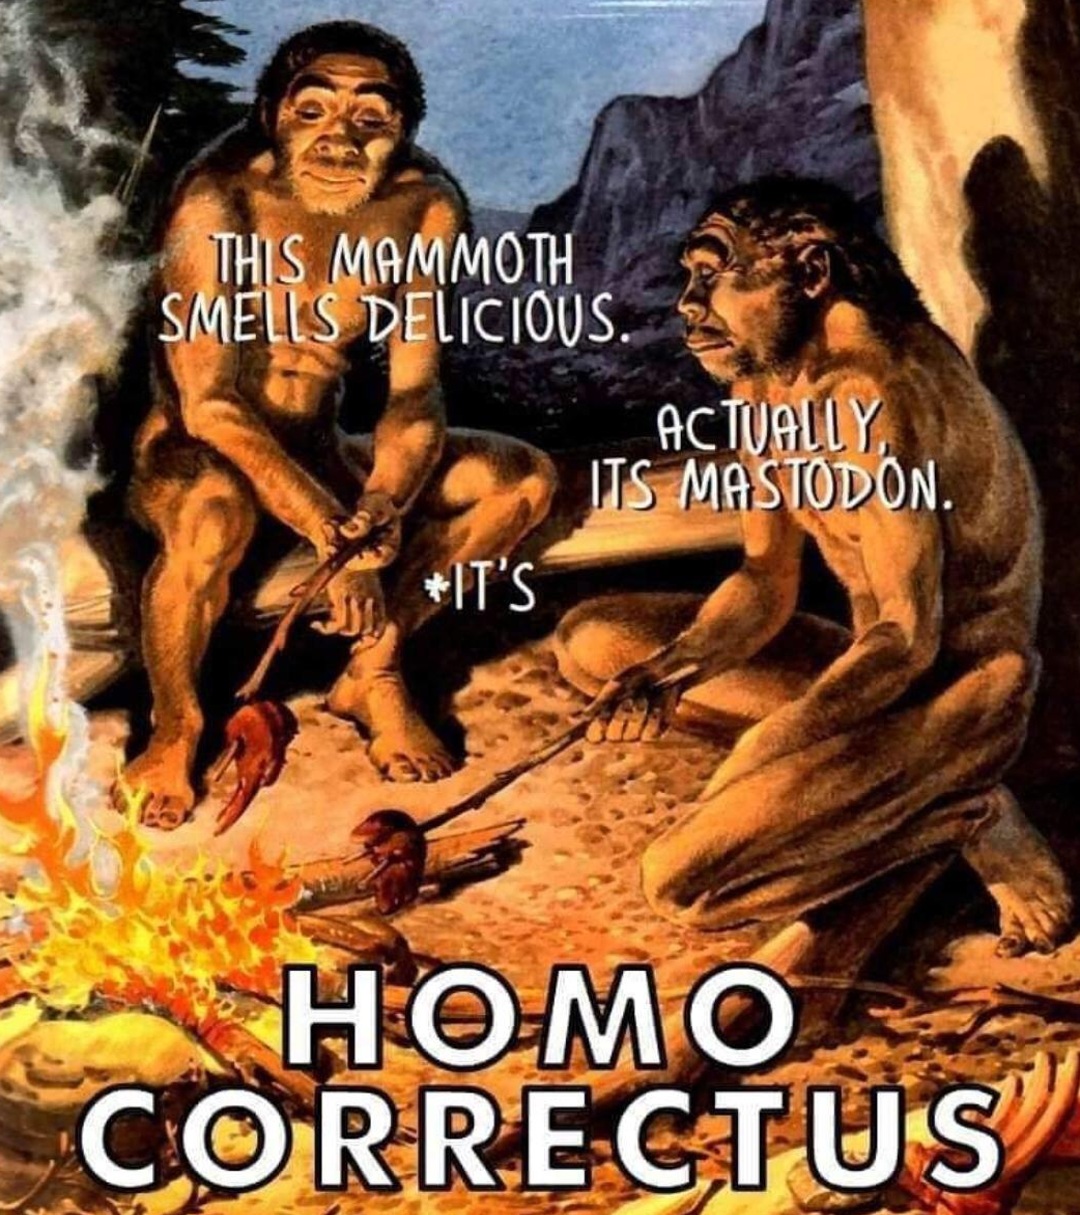 Stone age and homo correctus